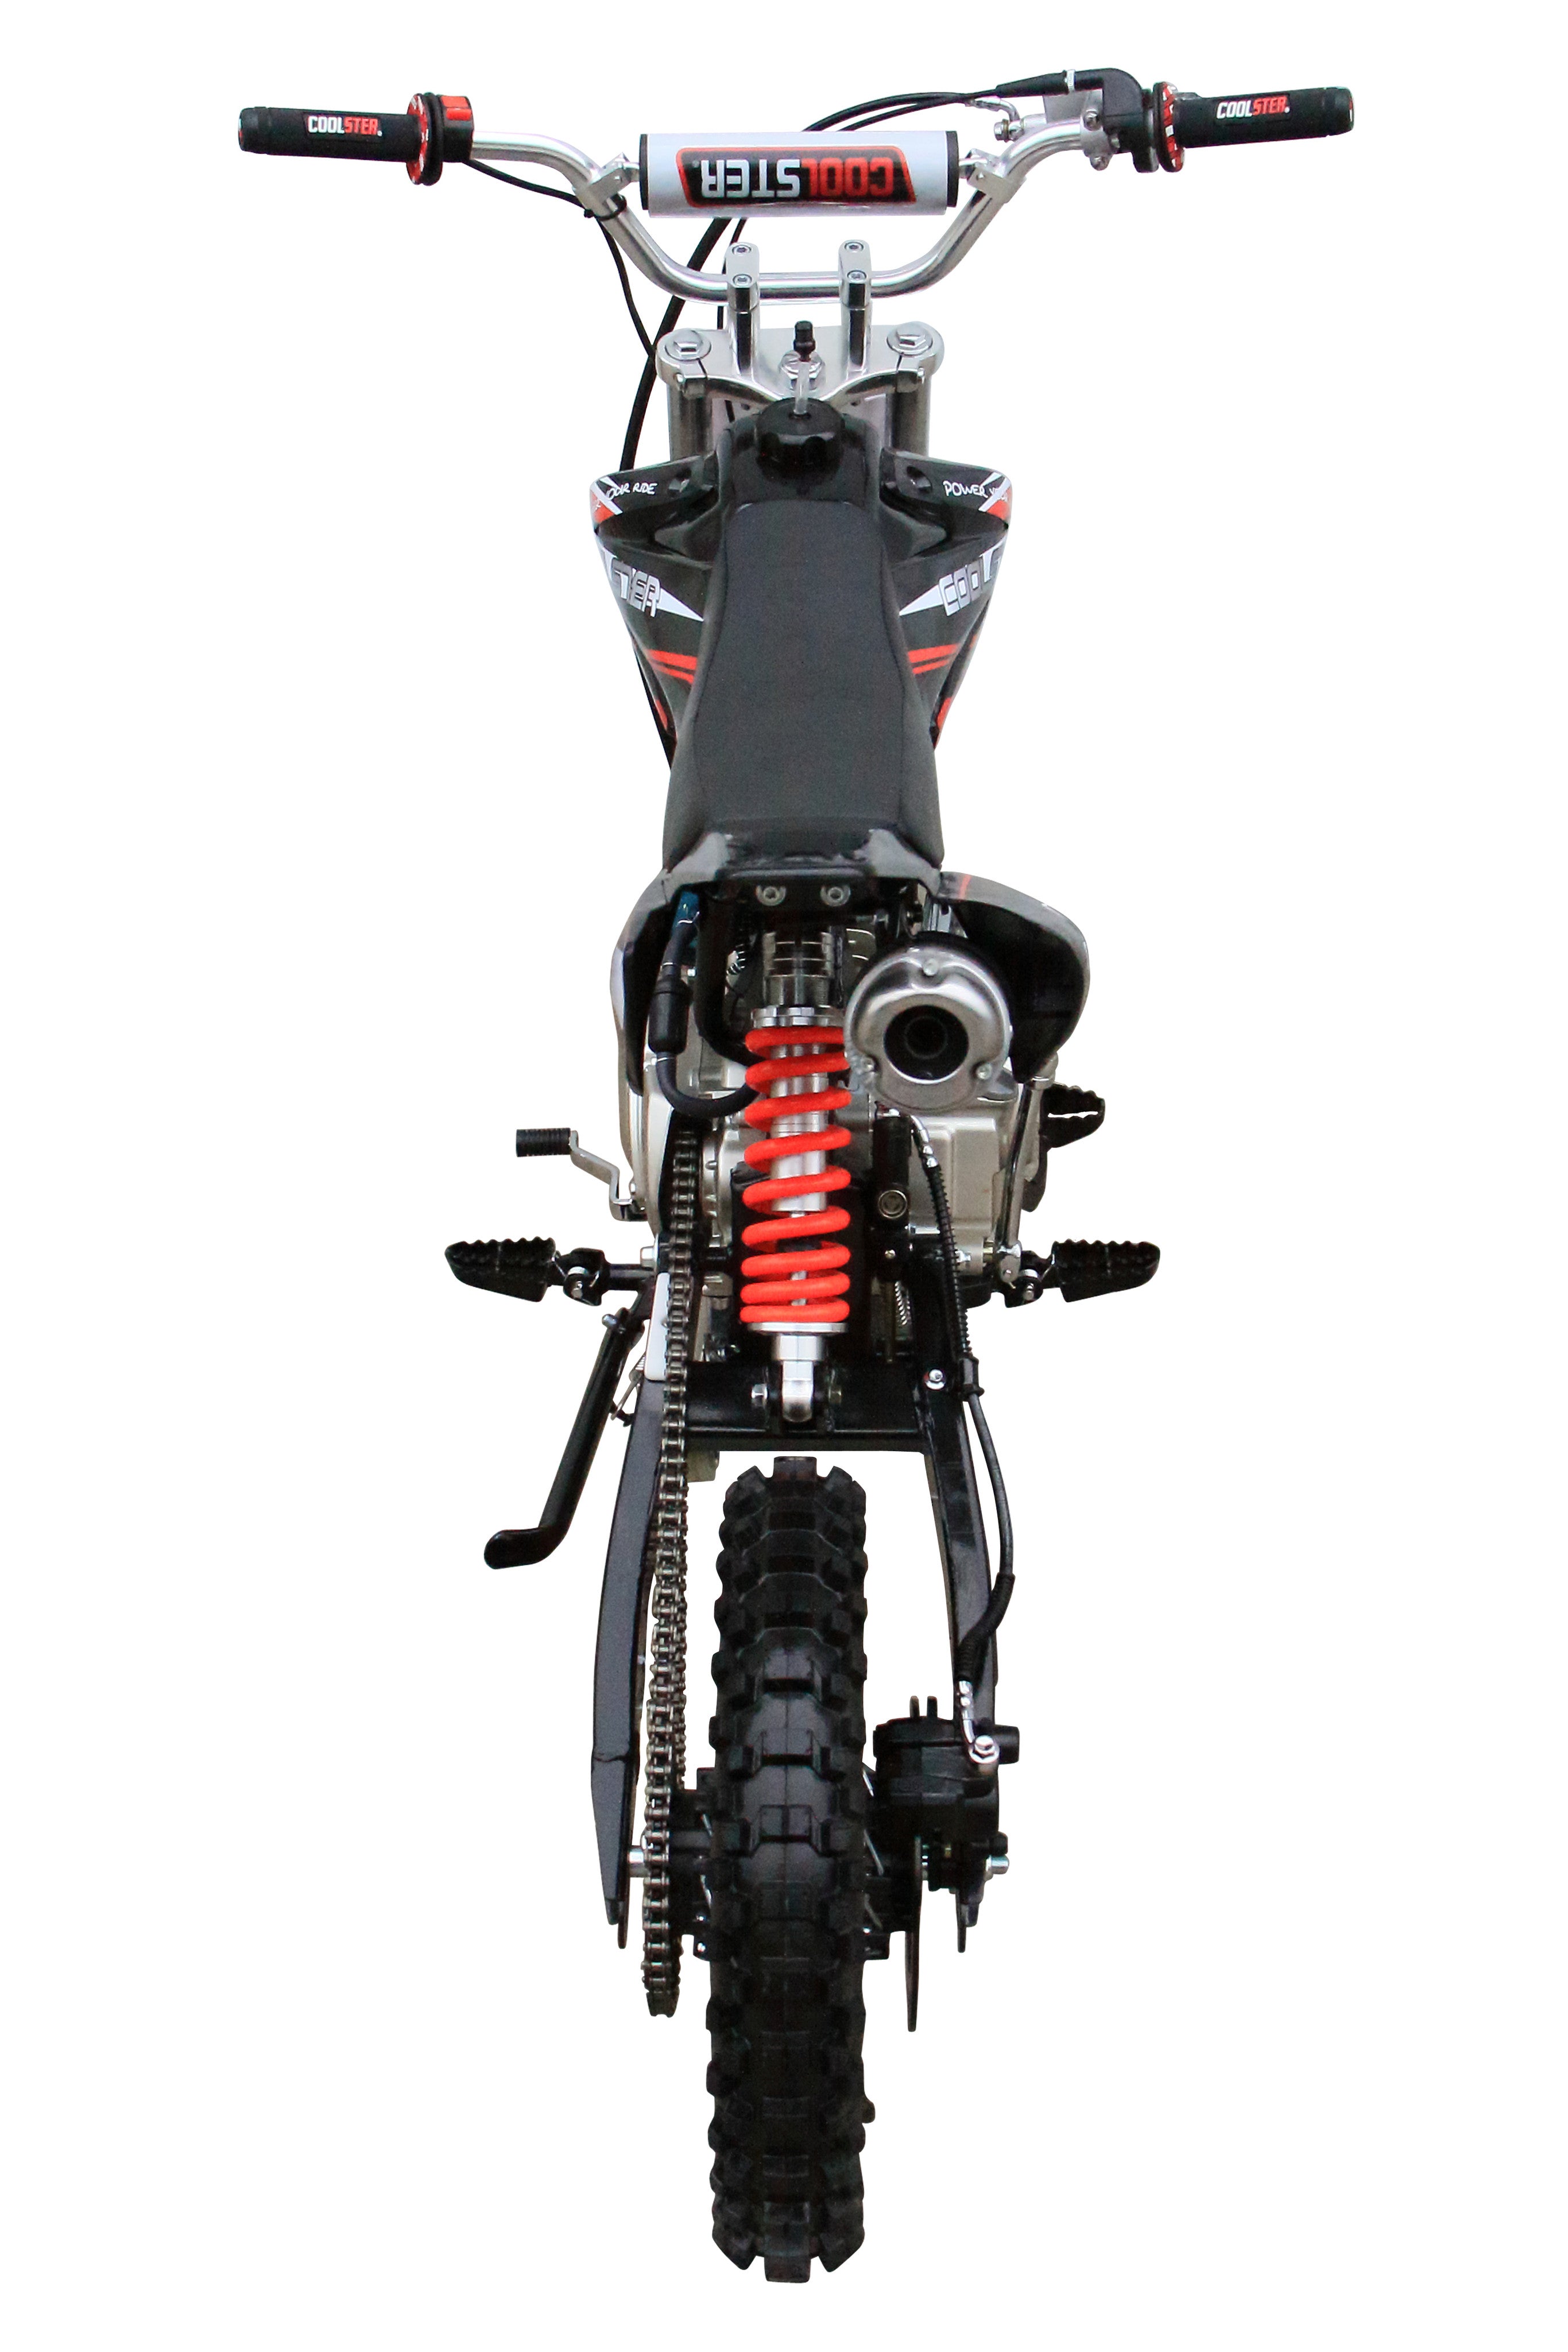 Coolster M125cc Dirt Bike